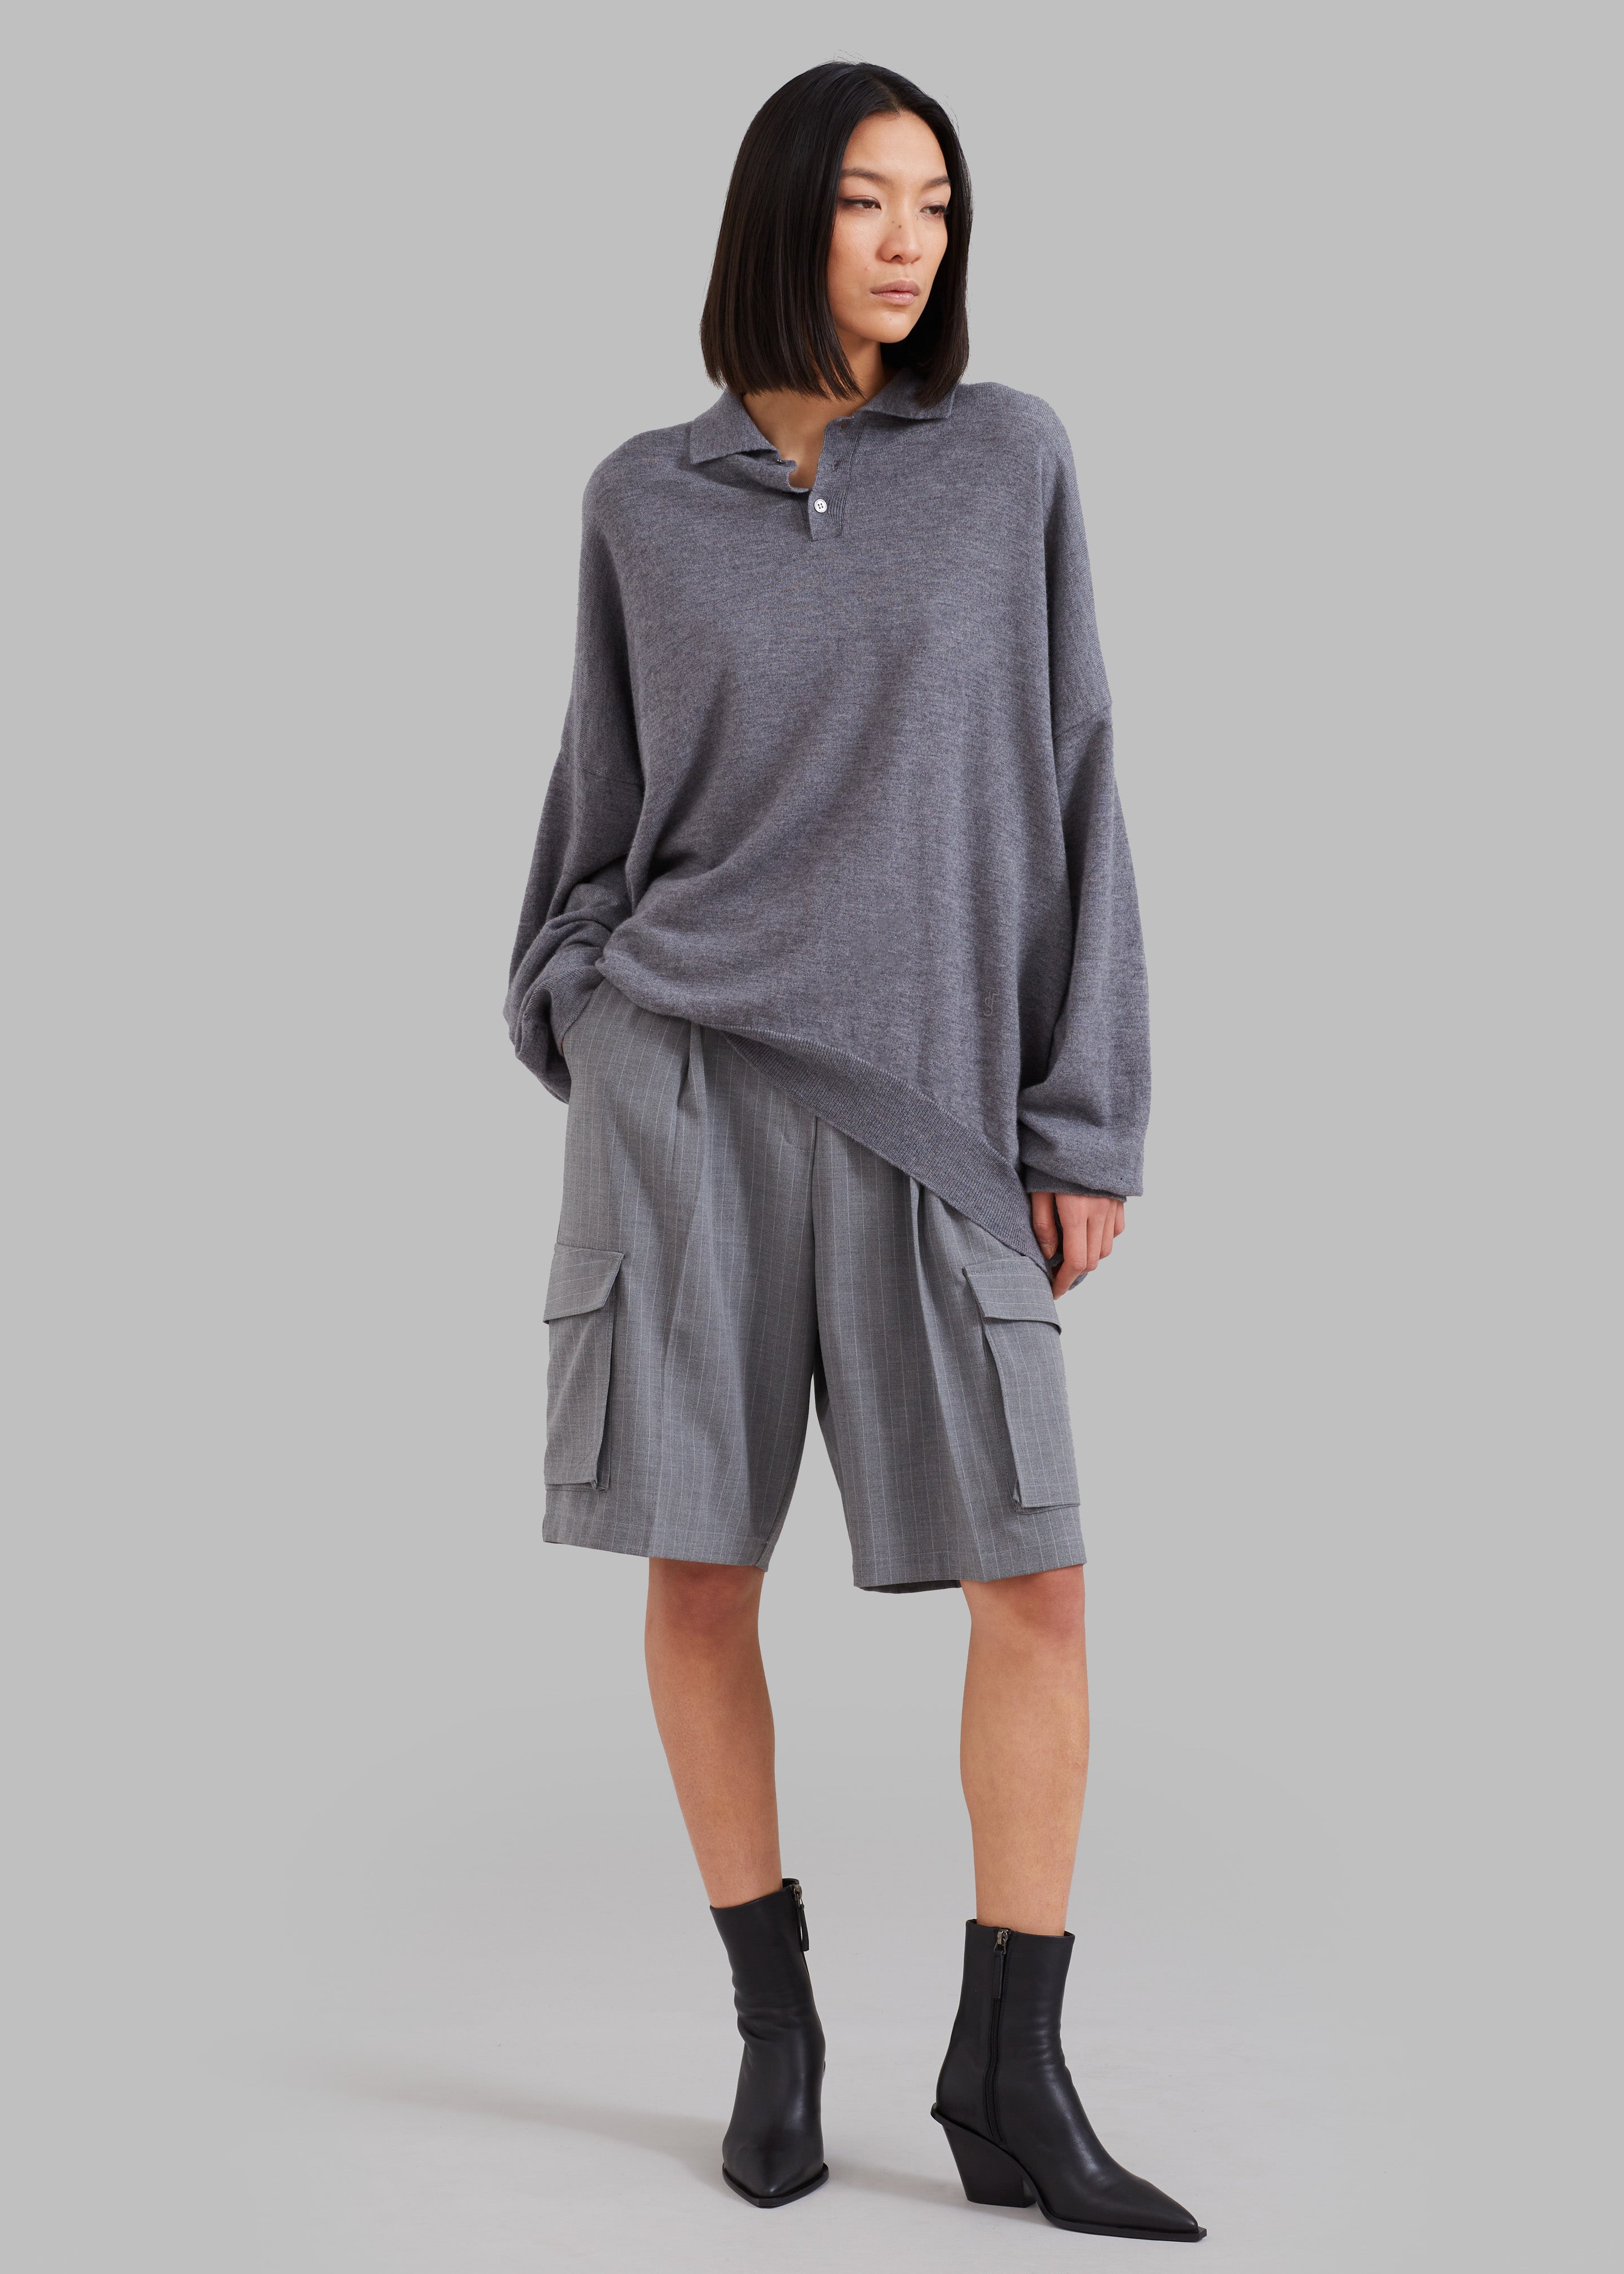 Meriel Polo Sweater - Grey - 4